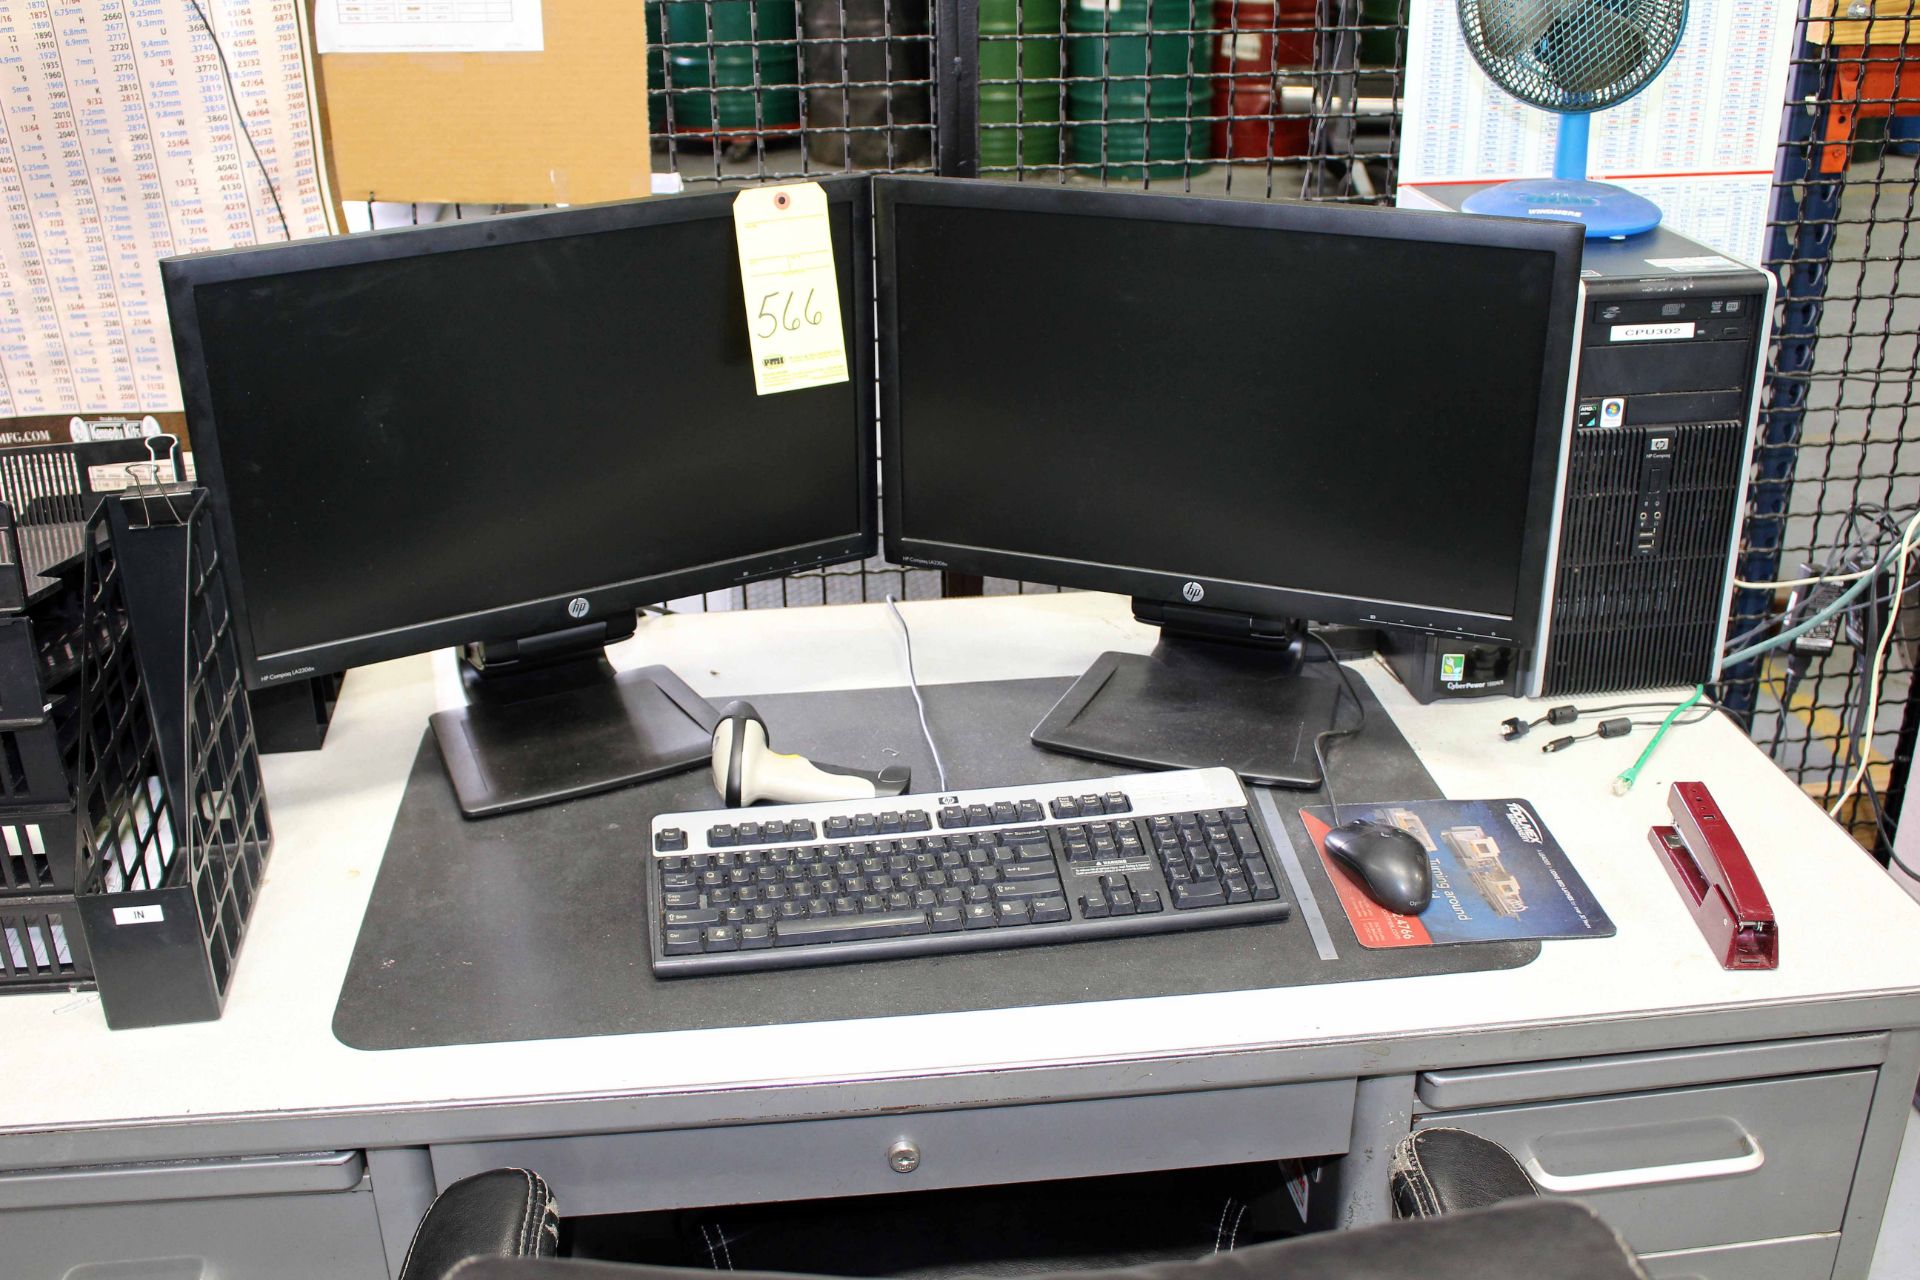 PERSONAL COMPUTER, monitors (2), keyboard, mouse